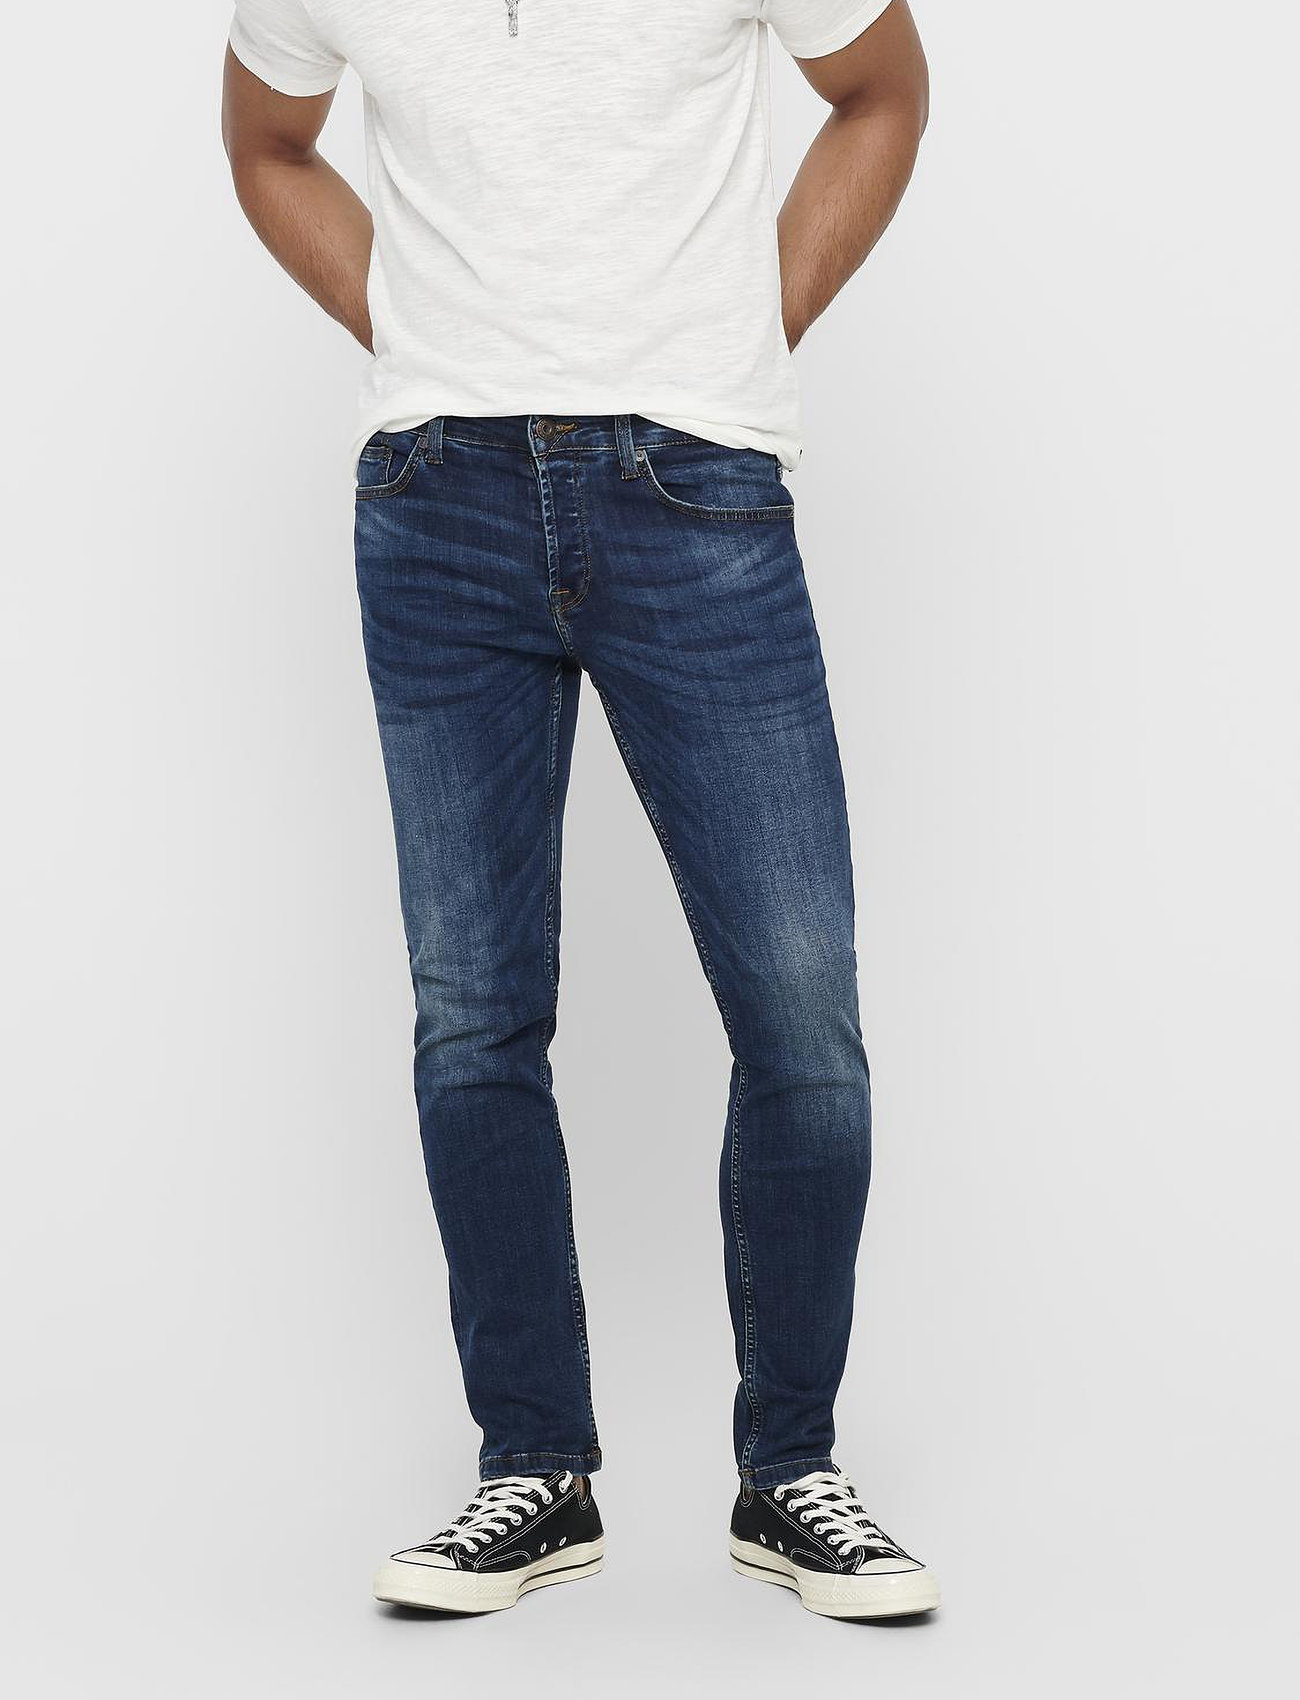 Aanpassing Verbaasd Bedoel ONLY & SONS Onsweft Life Med Blue 5076 Pk - Regular jeans - Boozt.com